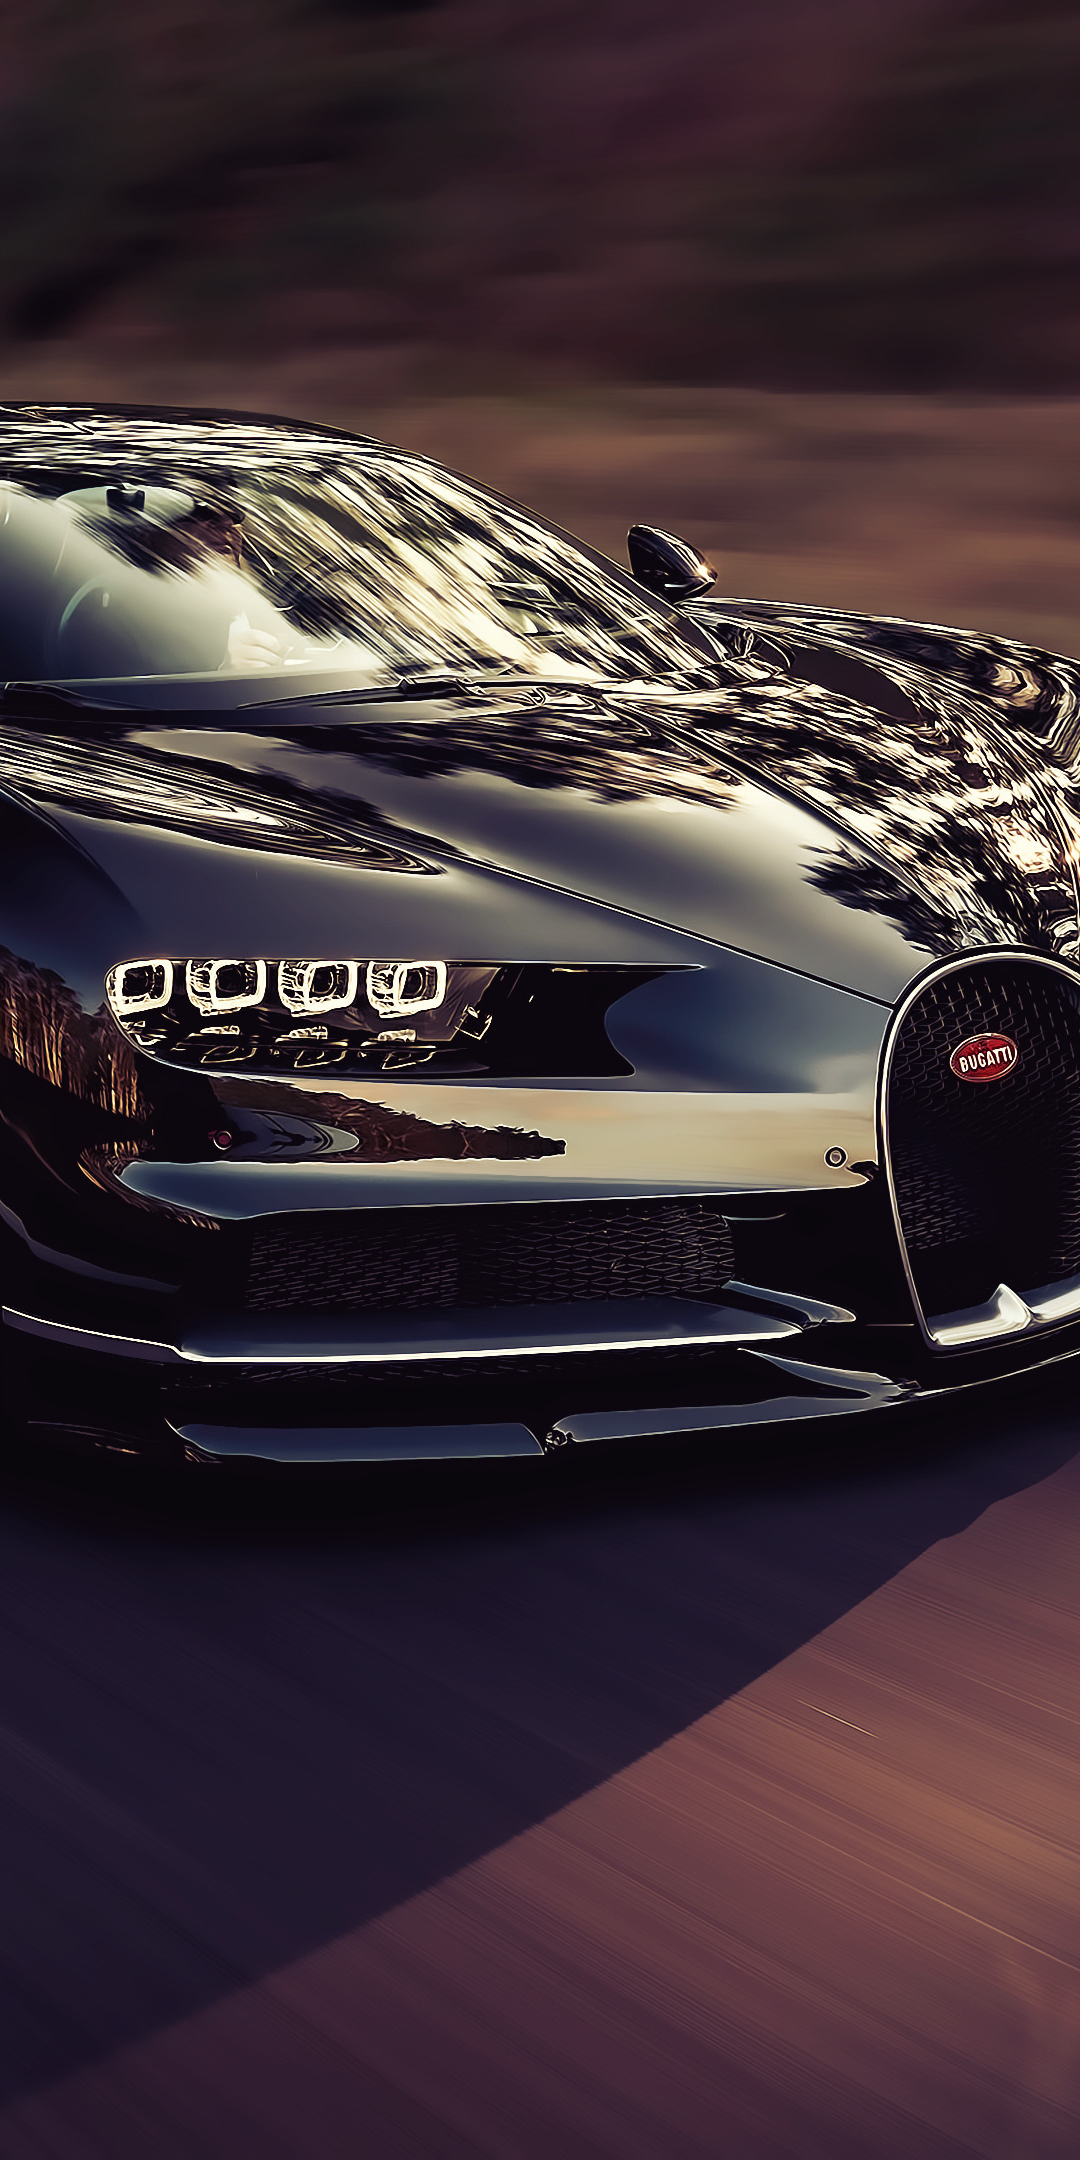 Luxury car, bugatti chiron, on road, 1080x2160 wallpaper